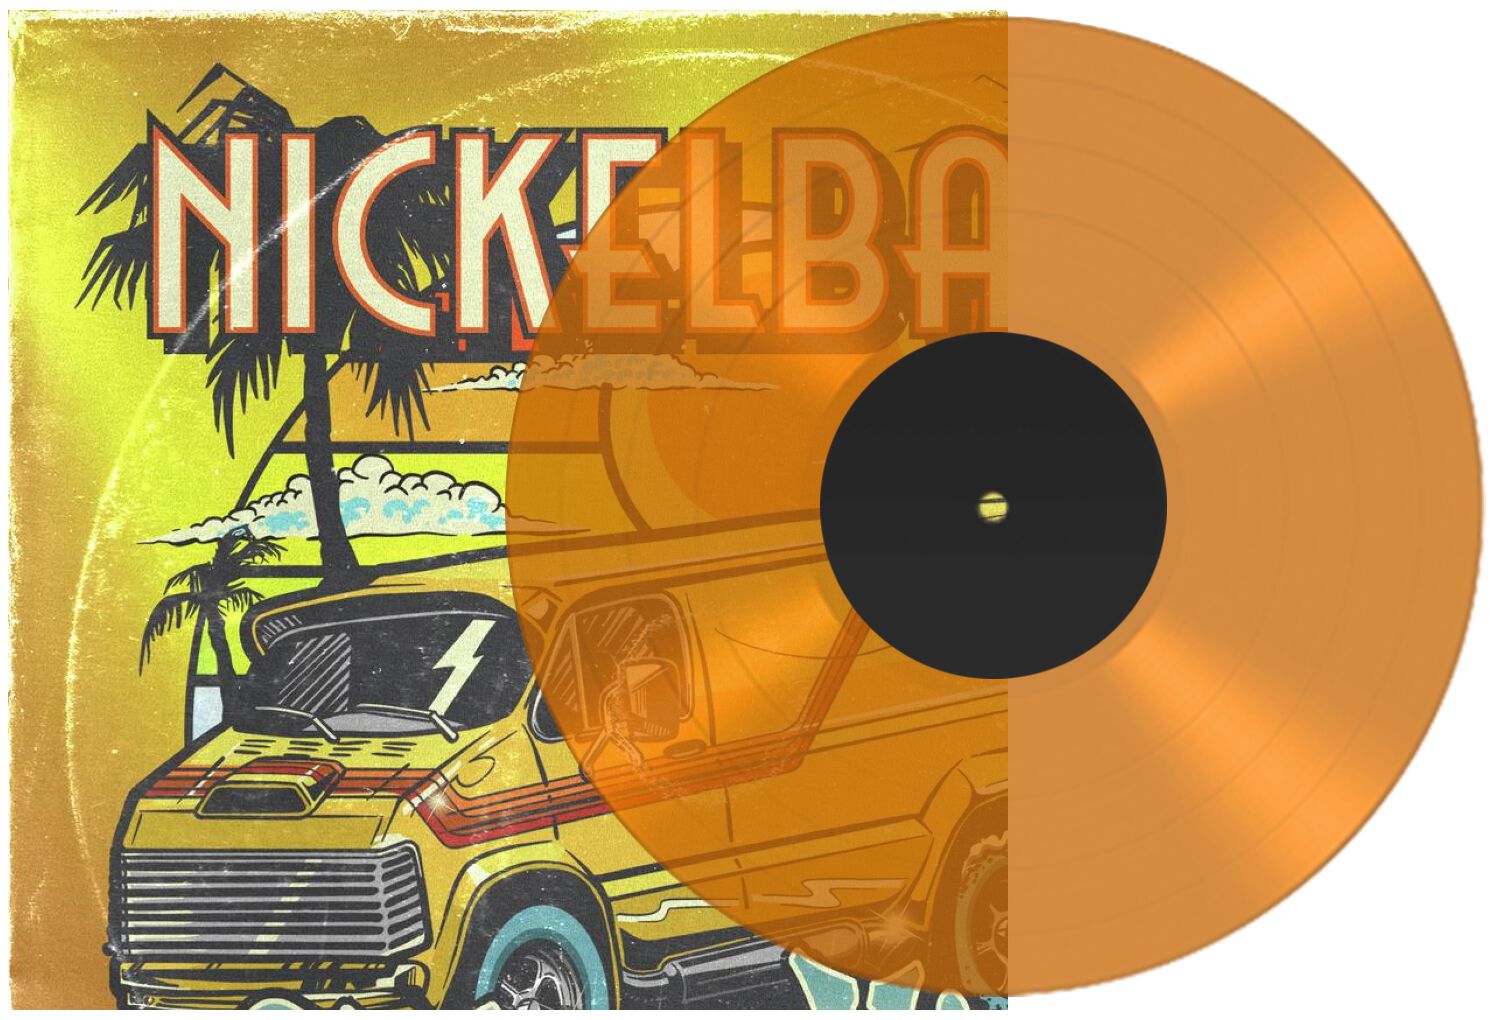 Nickelback Get rollin` LP farbig